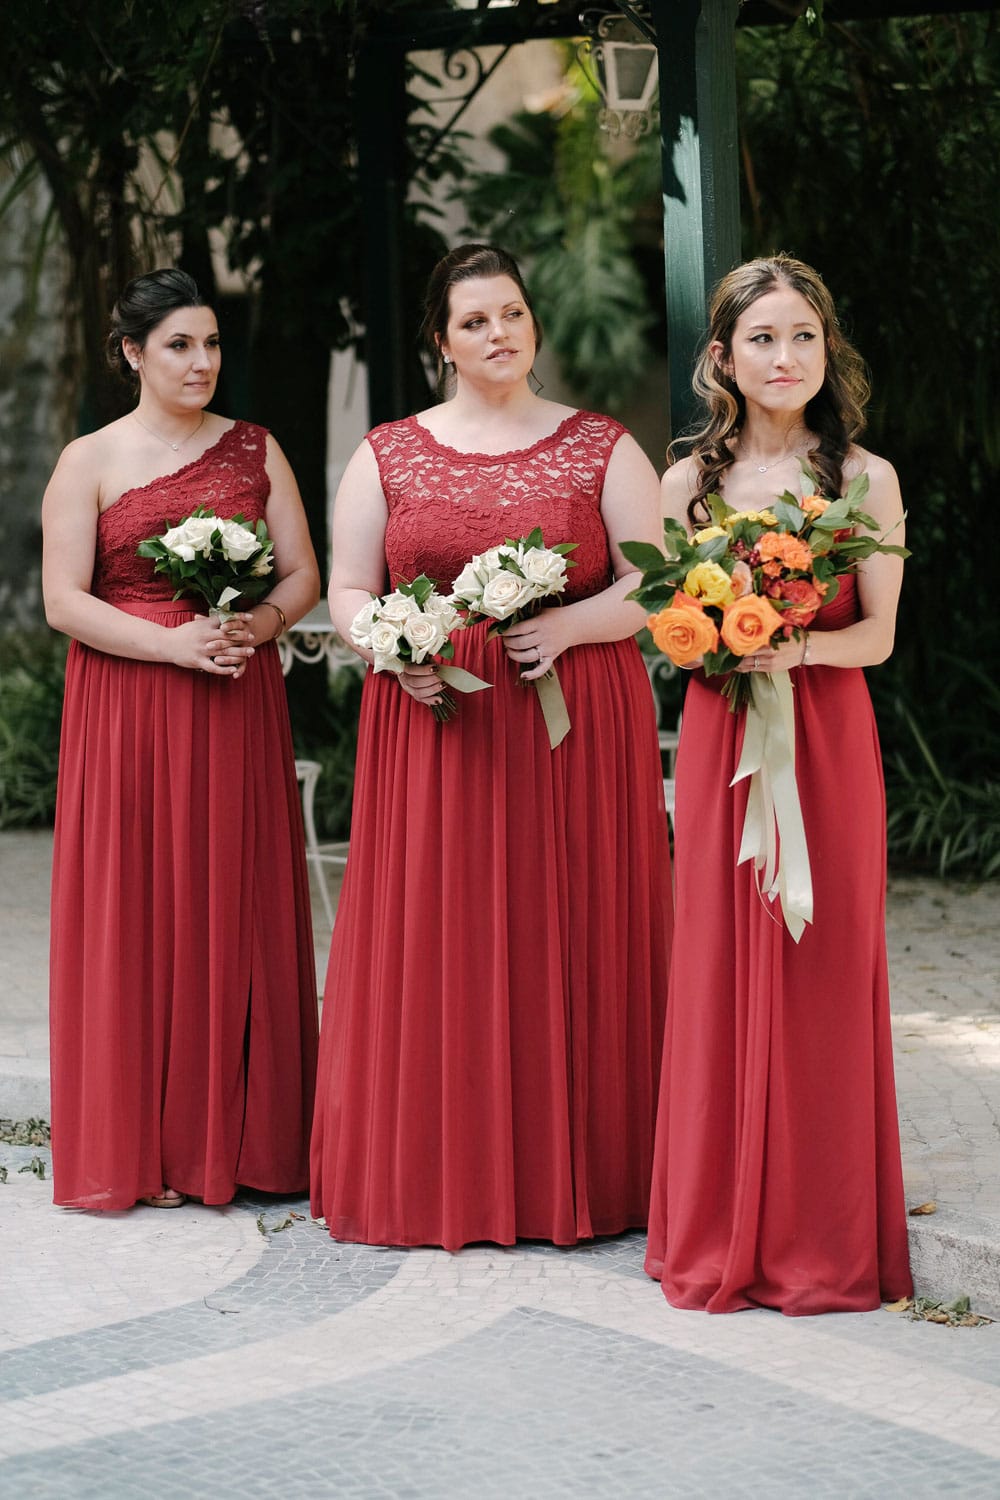 bridesmaids red dresses #red #bridesmaids #bridesmaidsdresses